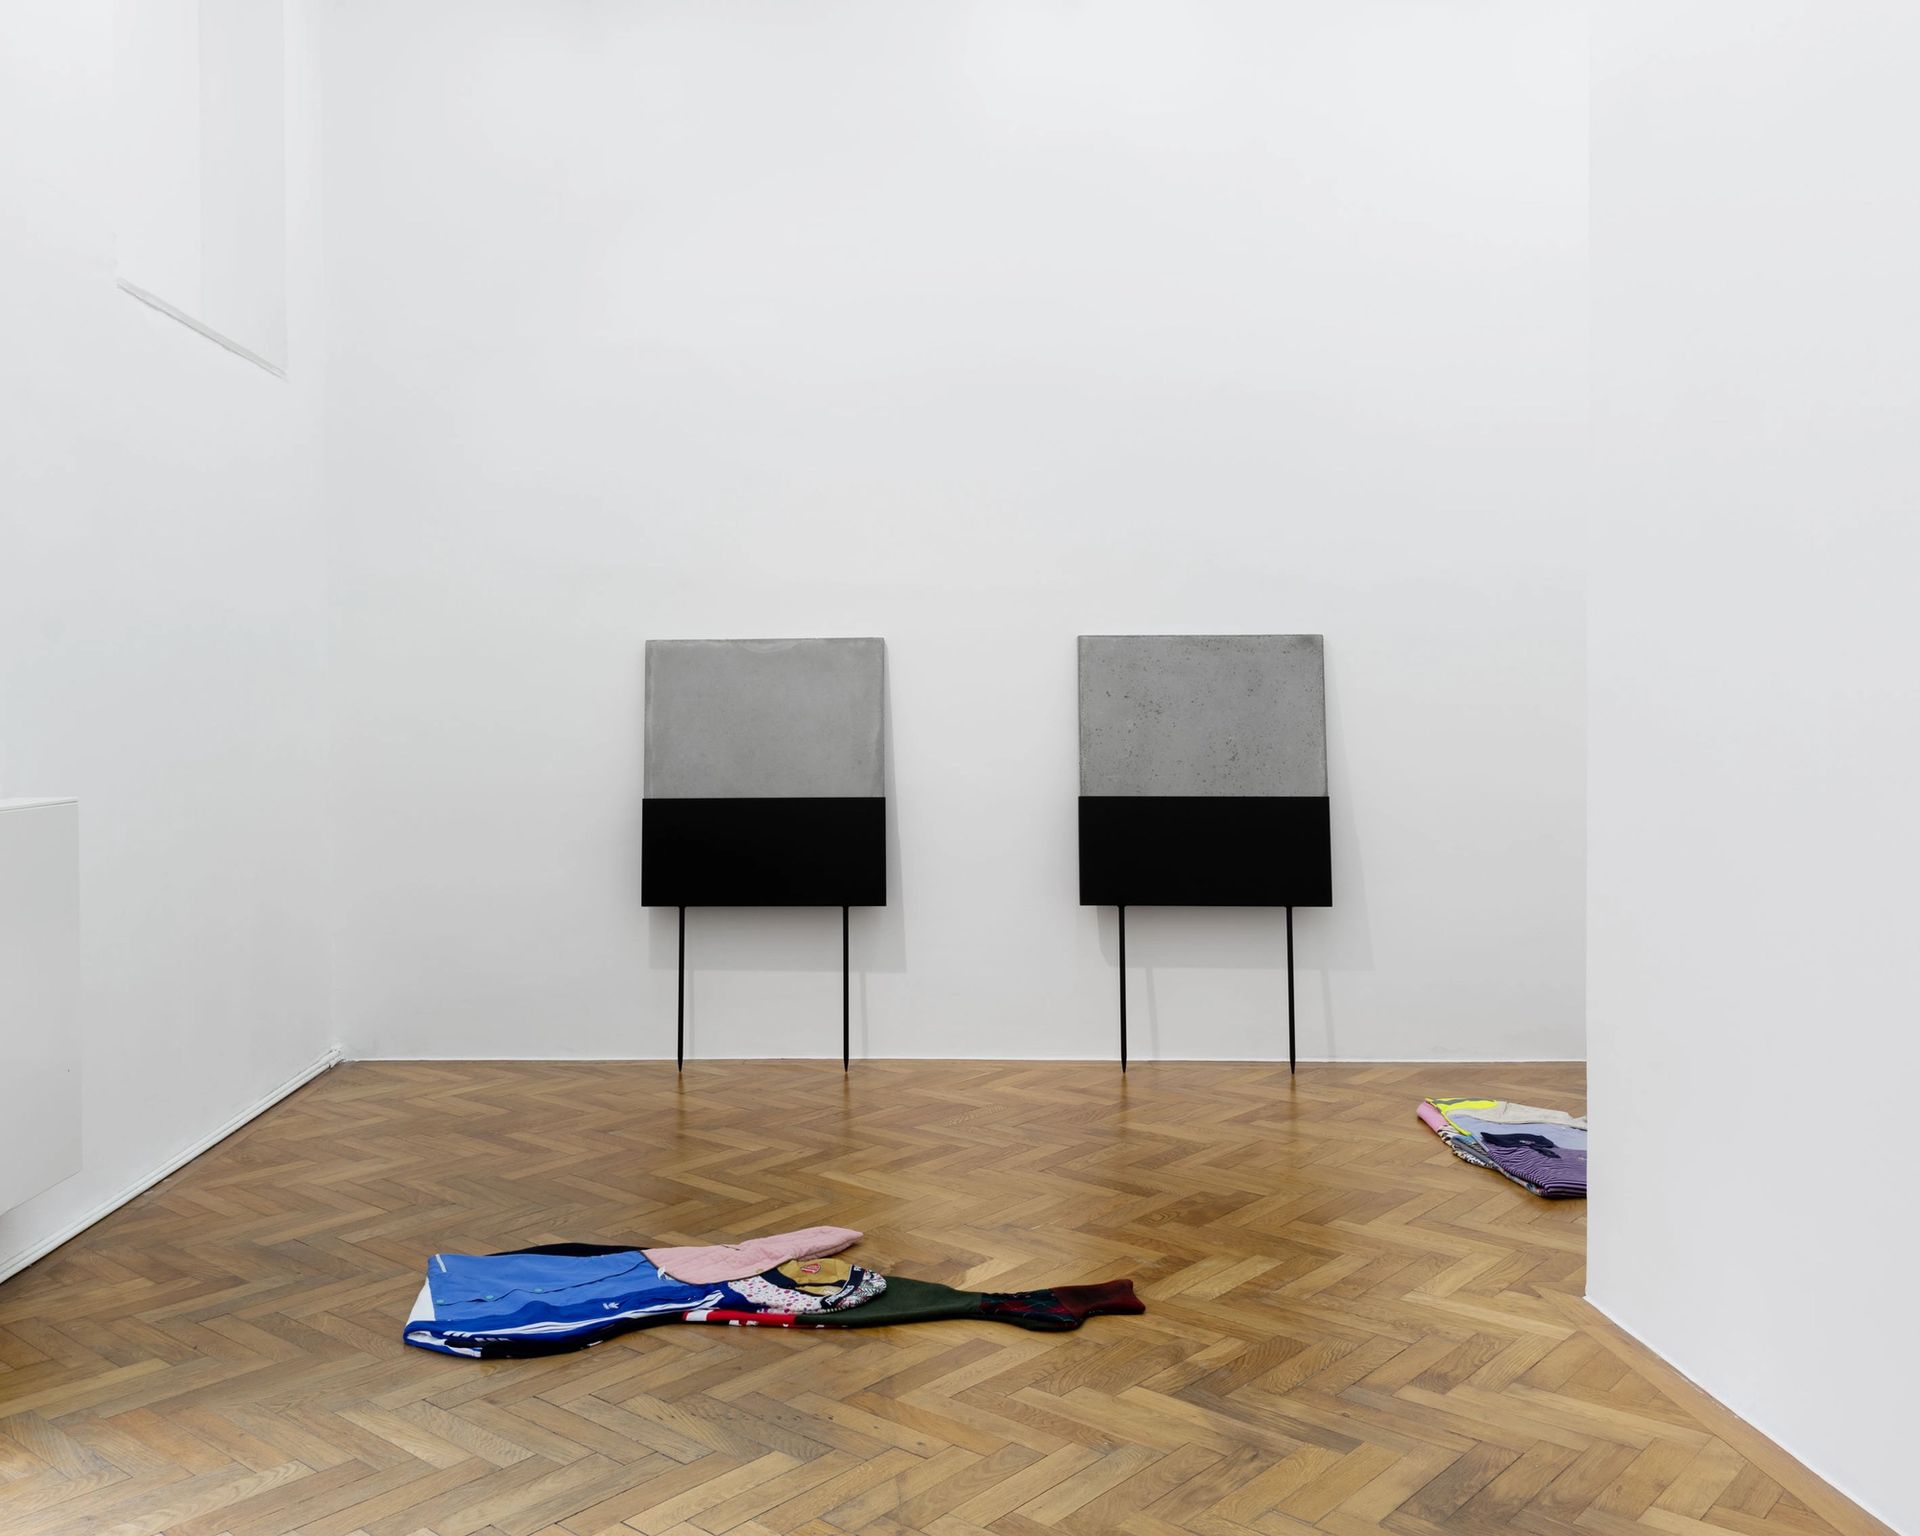 Exhibition View: Malte Zenses, ,Im Regio 3, totale Verwirrung,, 2020, photo: Sebastian Kissel